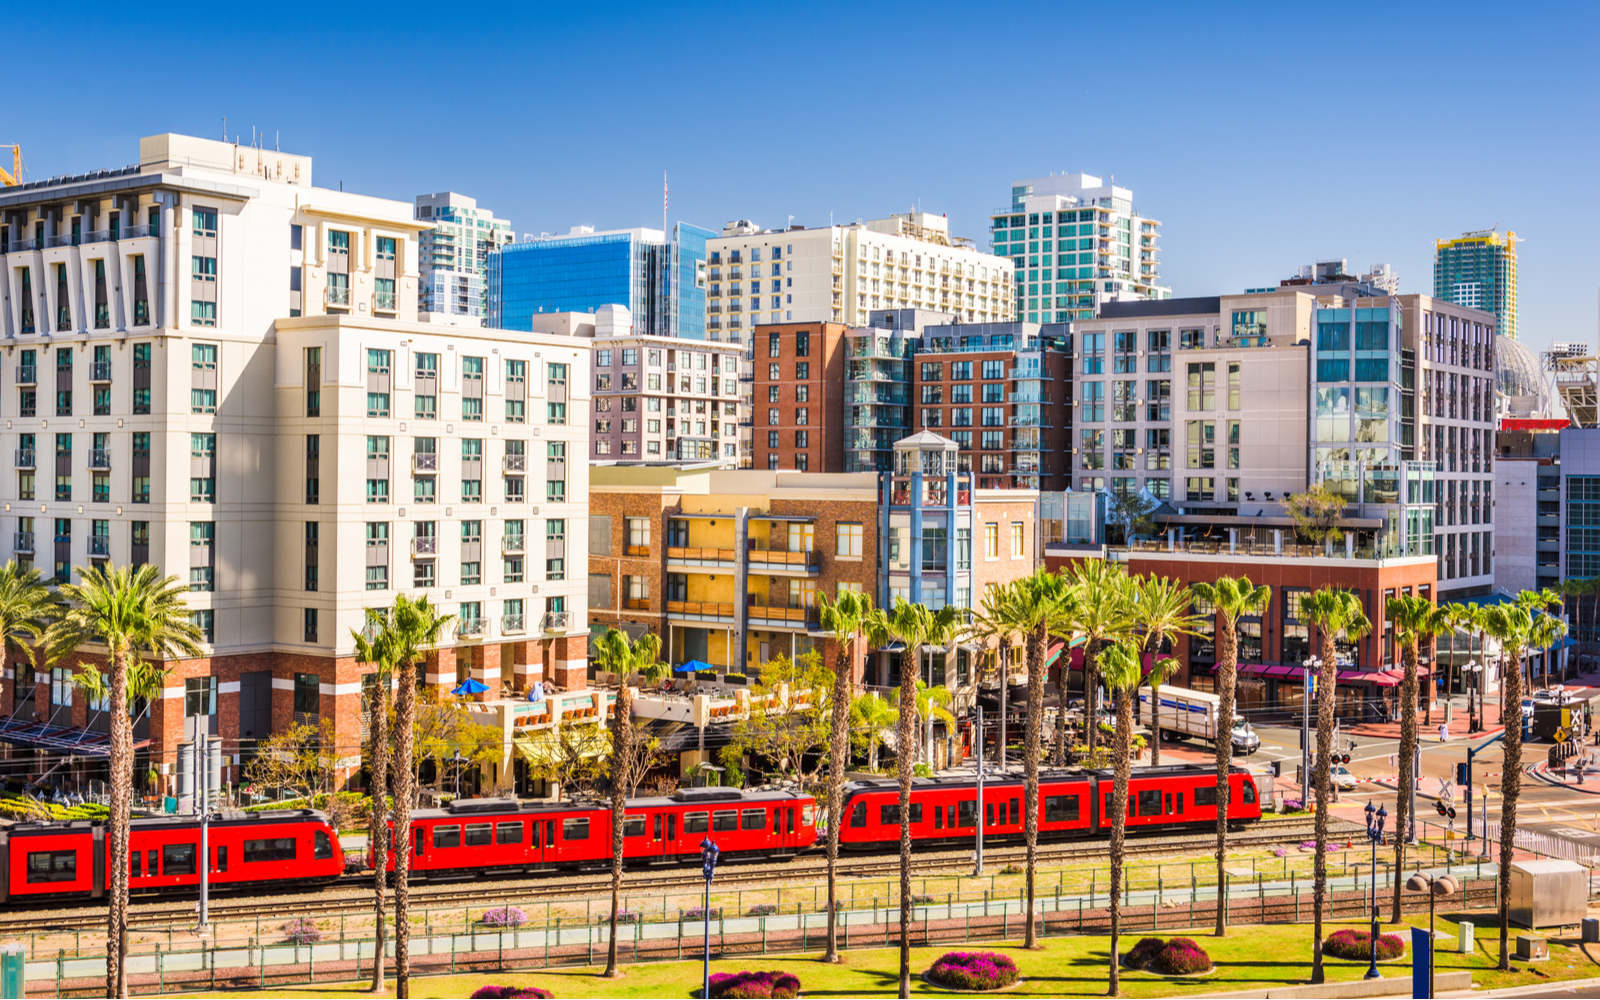 15 Best Hotels in San Diego in 2022